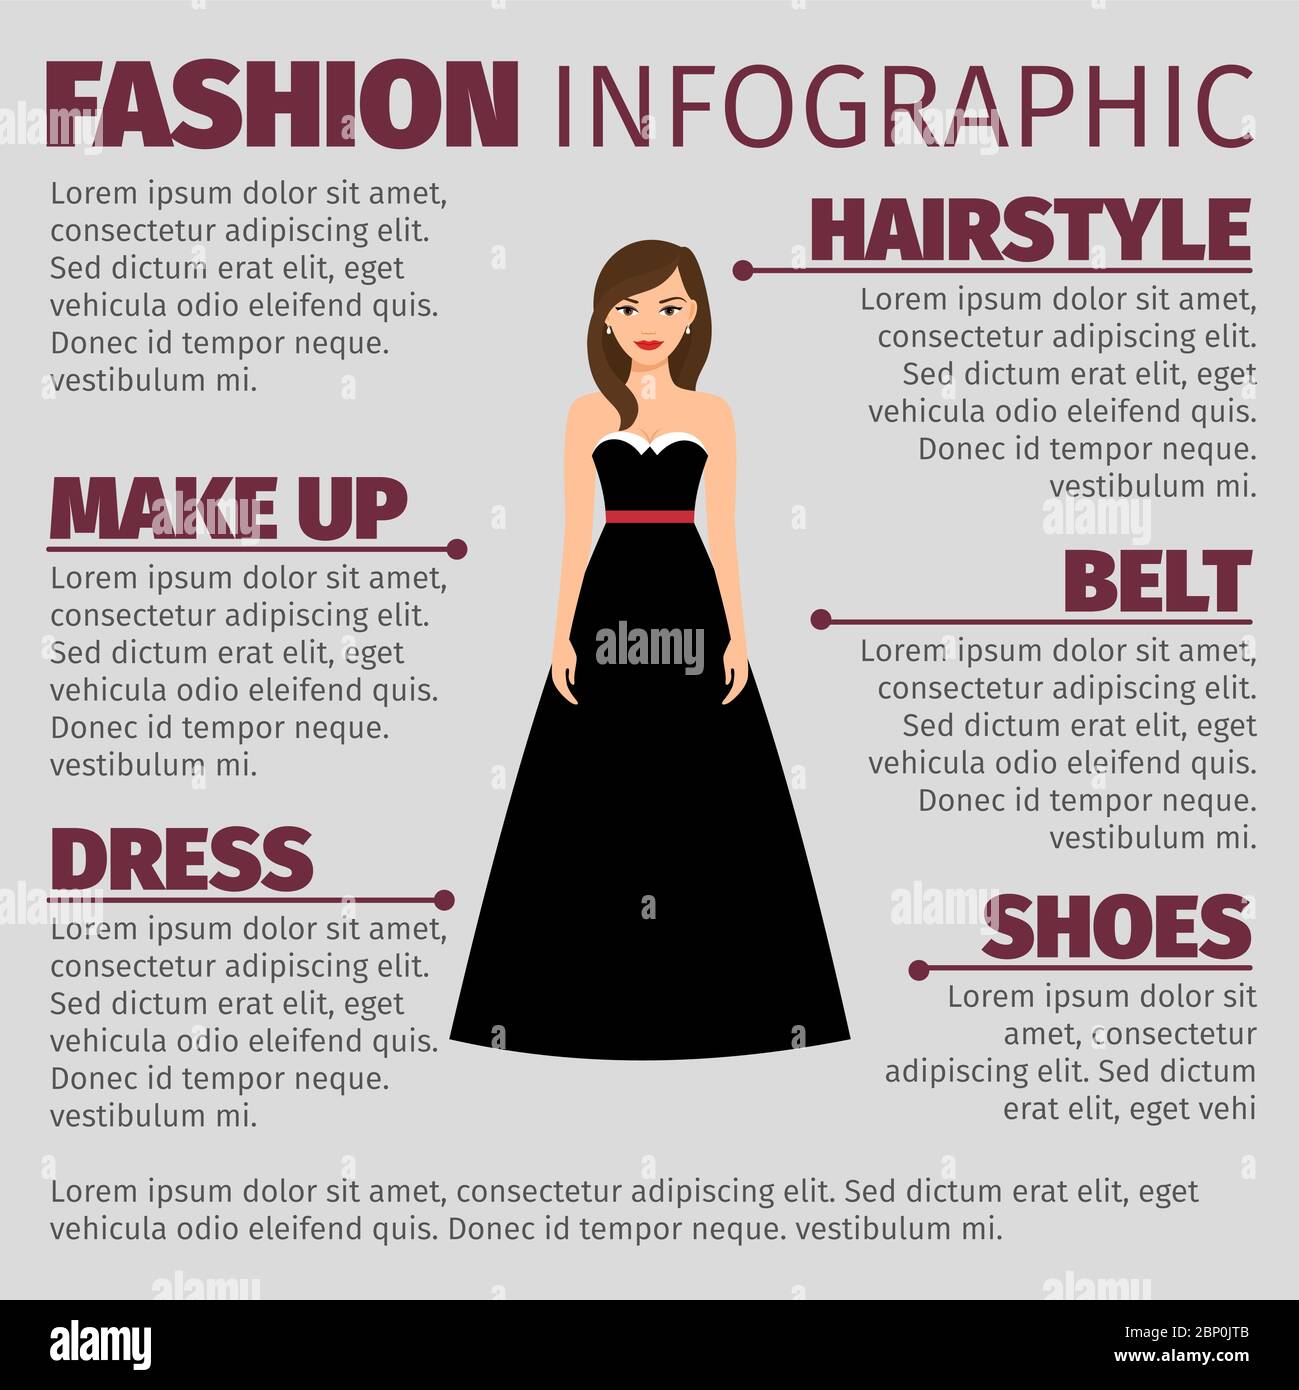 Mode Infografik mit Brünette in einem breiten schwarzen Kleid. Vektorgrafik Stock Vektor